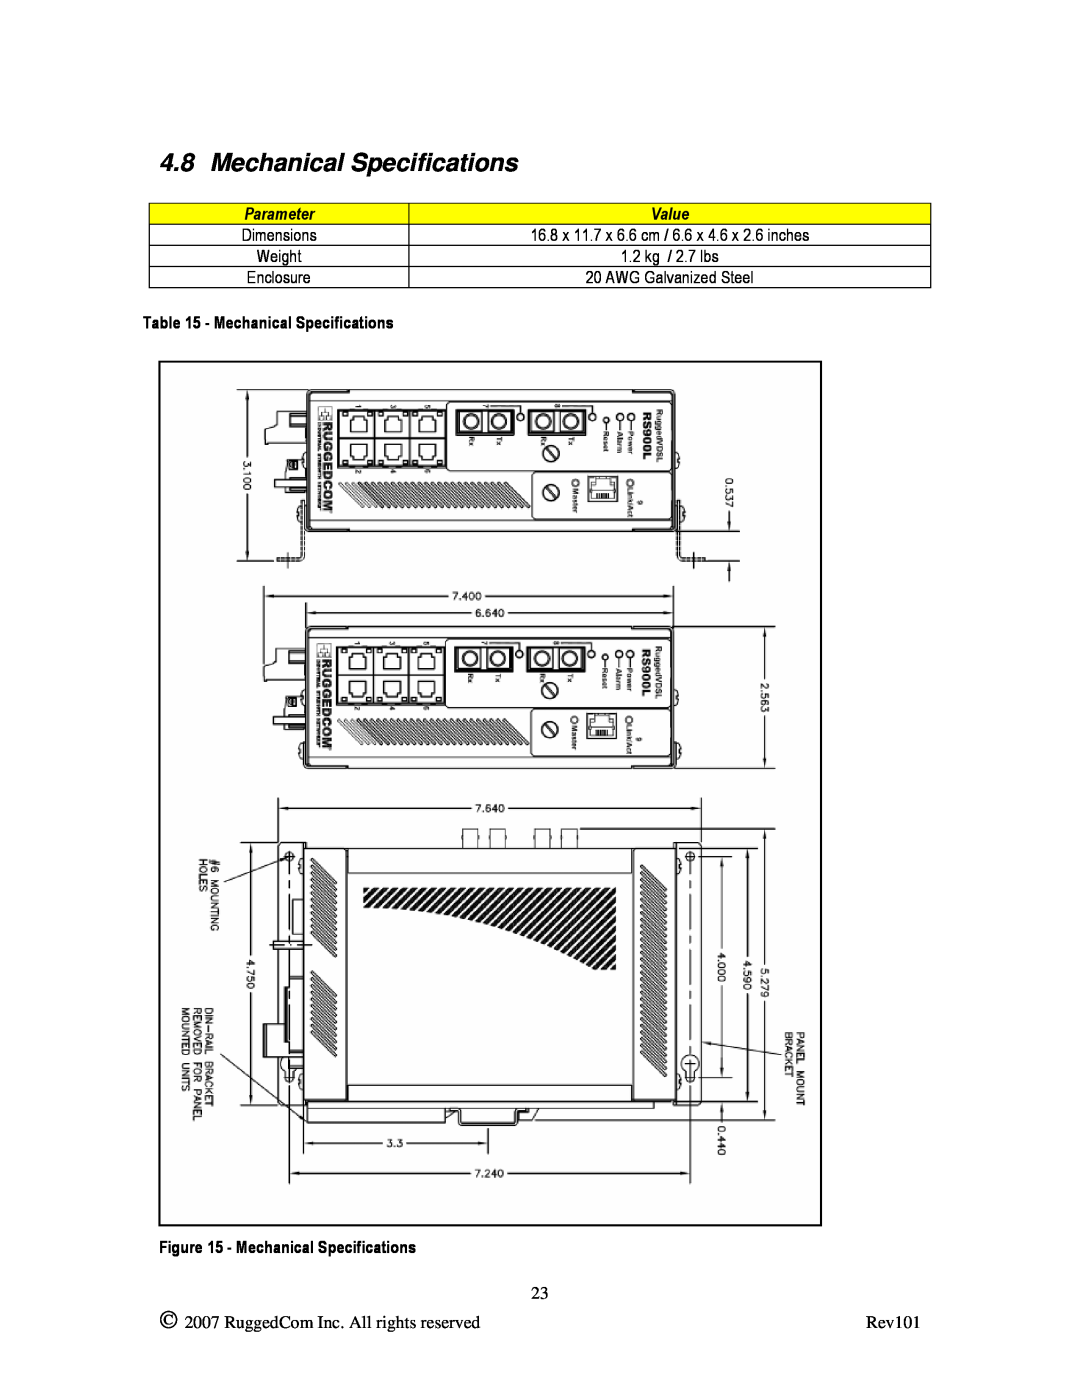 RuggedCom RS900L manual Mechanical Specifications, Parameter, Value,  2007 RuggedCom Inc. All rights reserved, Rev101 